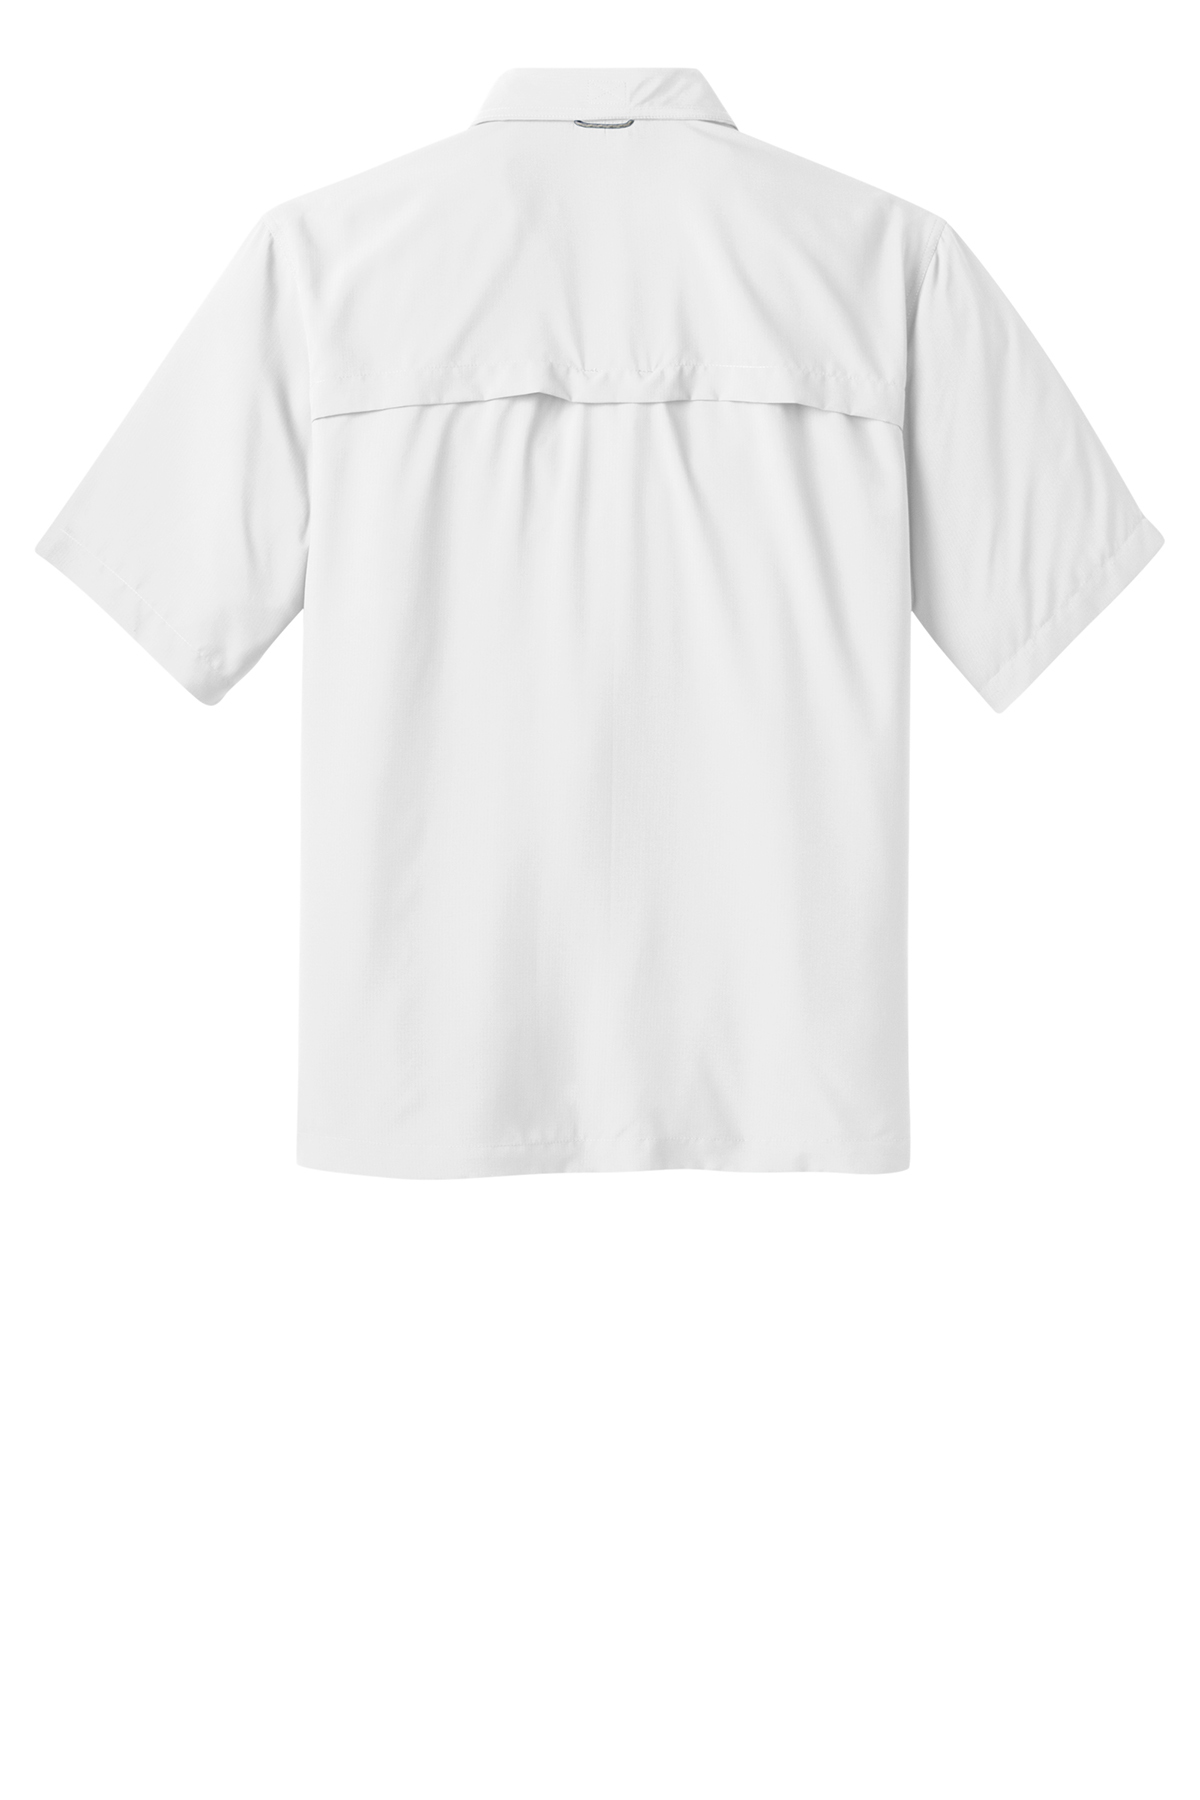 Eddie Bauer Men's Peach Short Sleeve Fishing Shirt Sz XXL - Vented NWOT